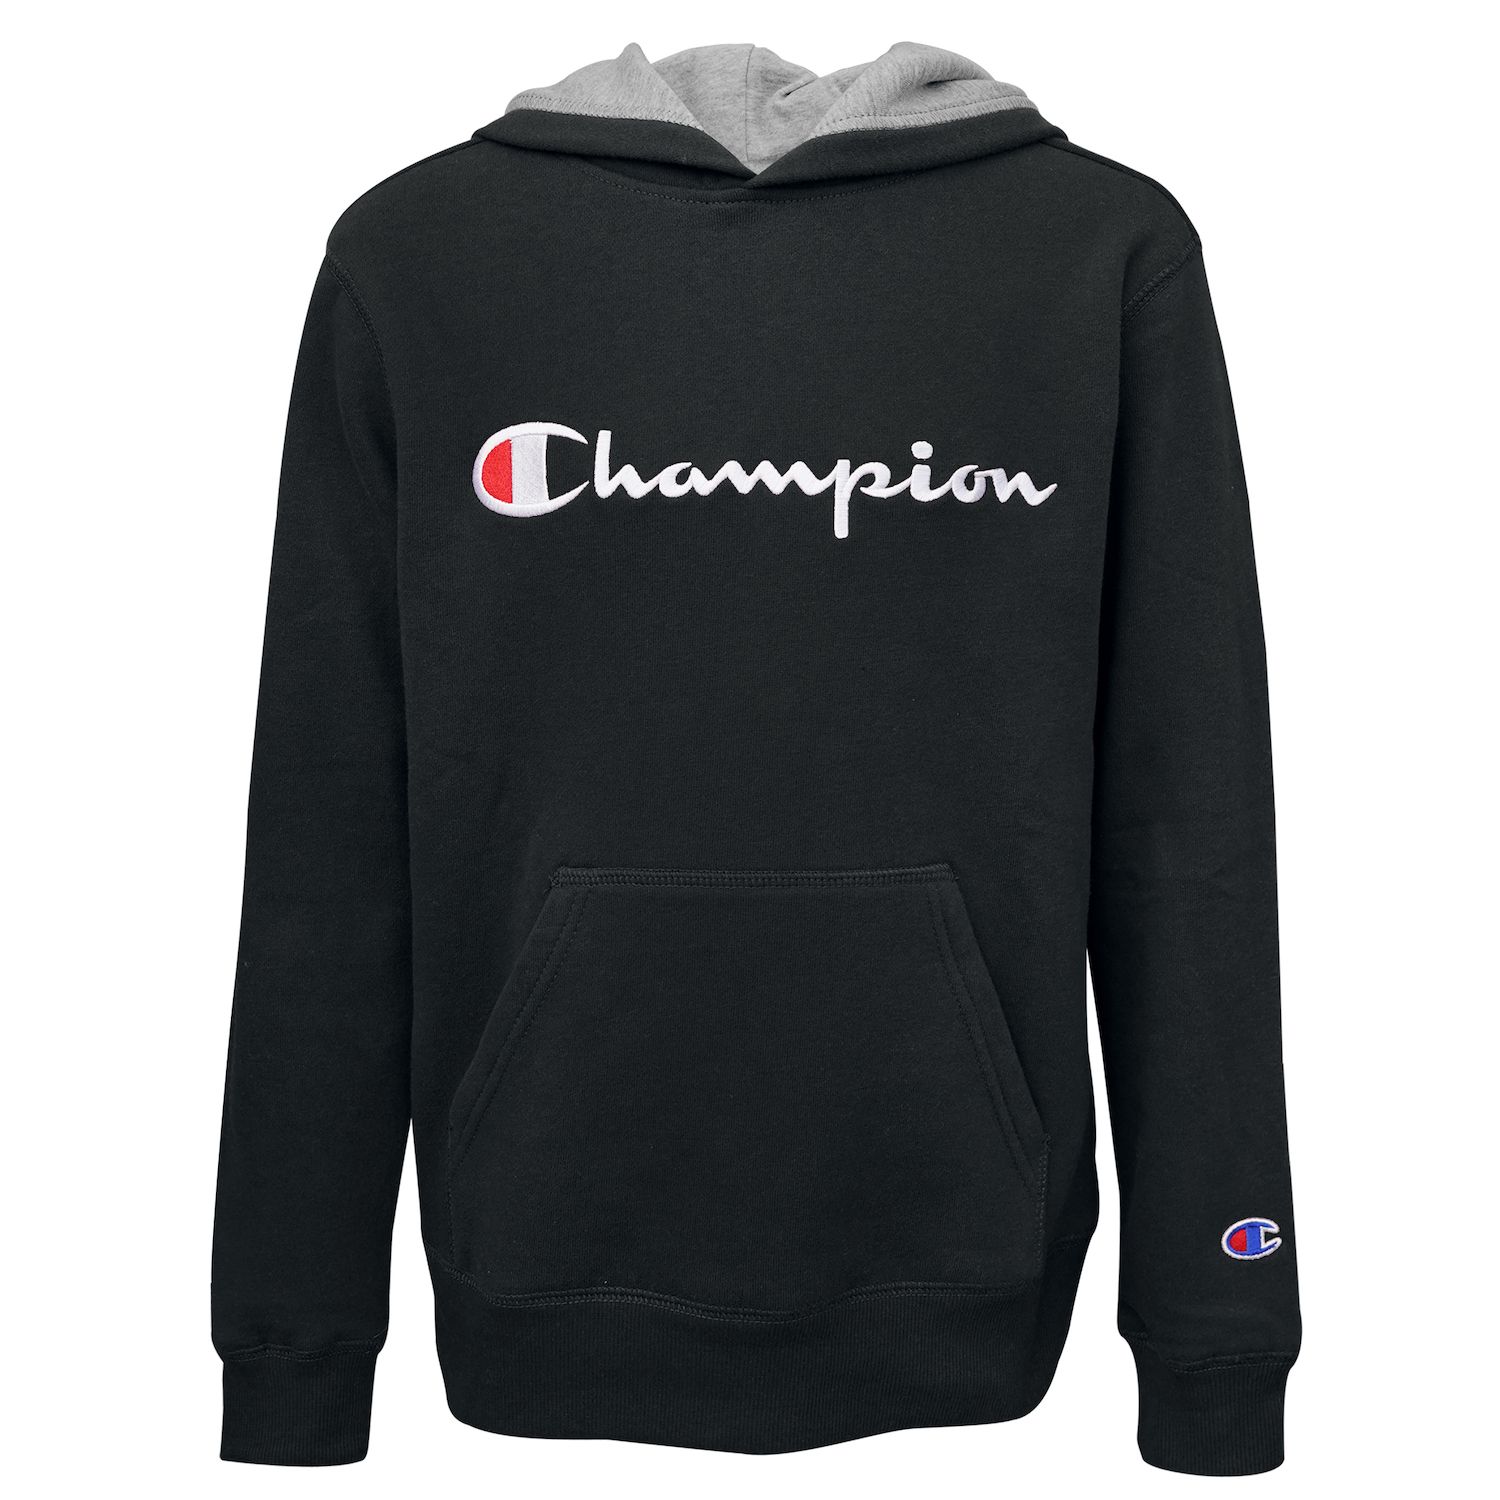 champion black zip up jacket